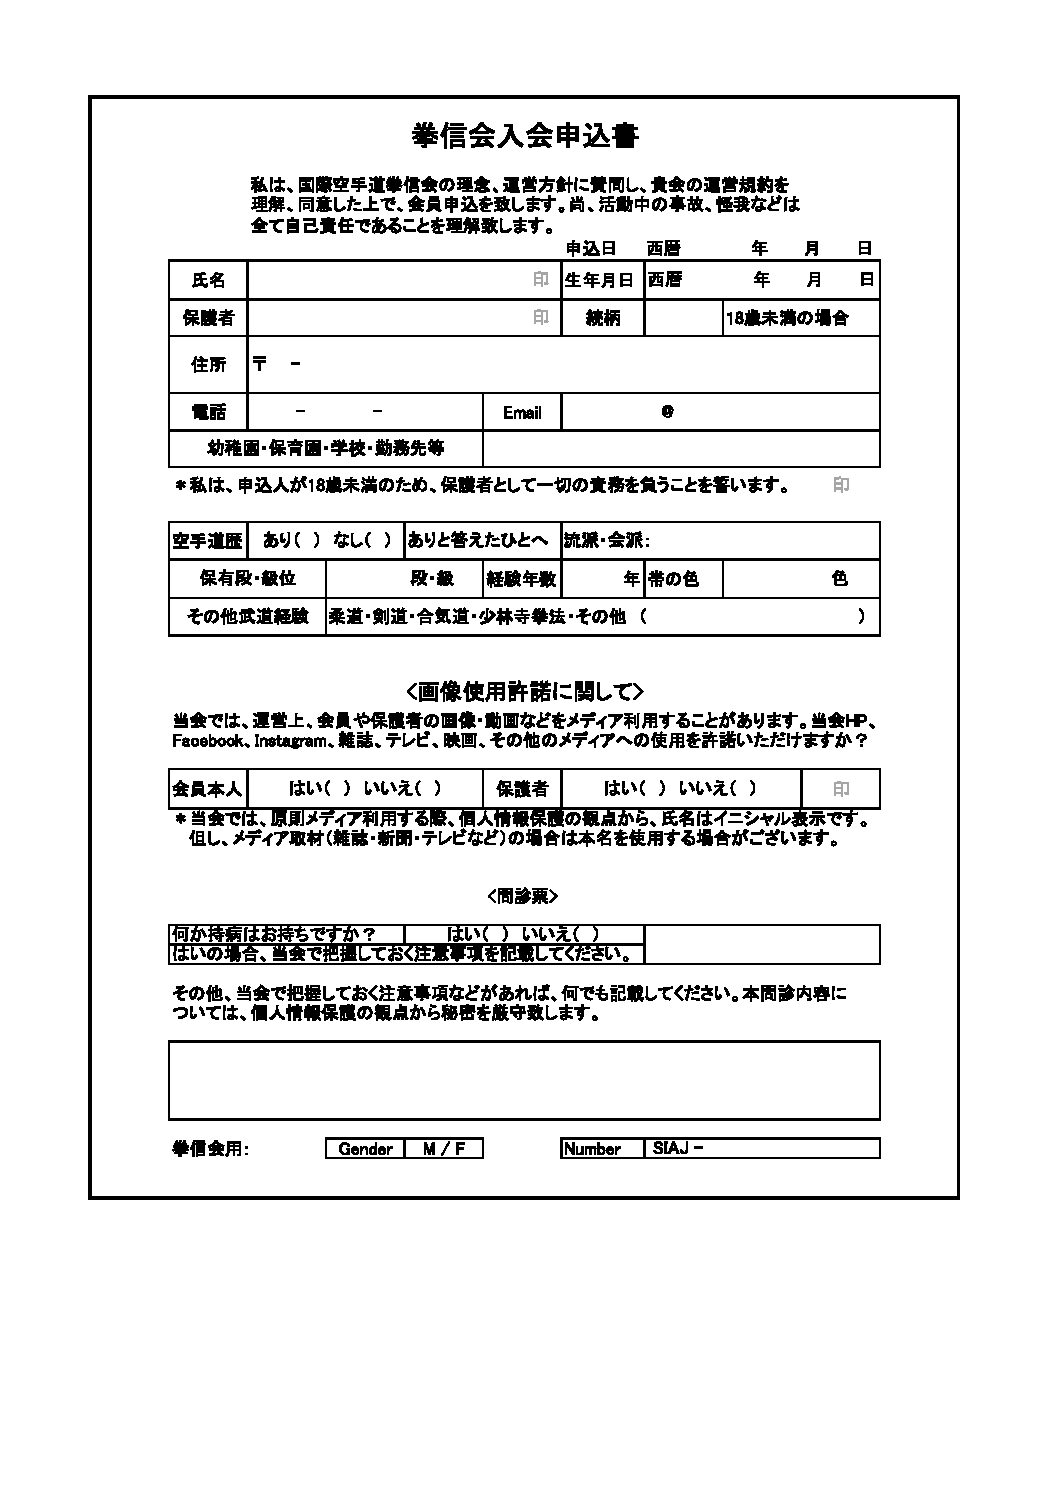 Kenshinkai_Application_2022-1